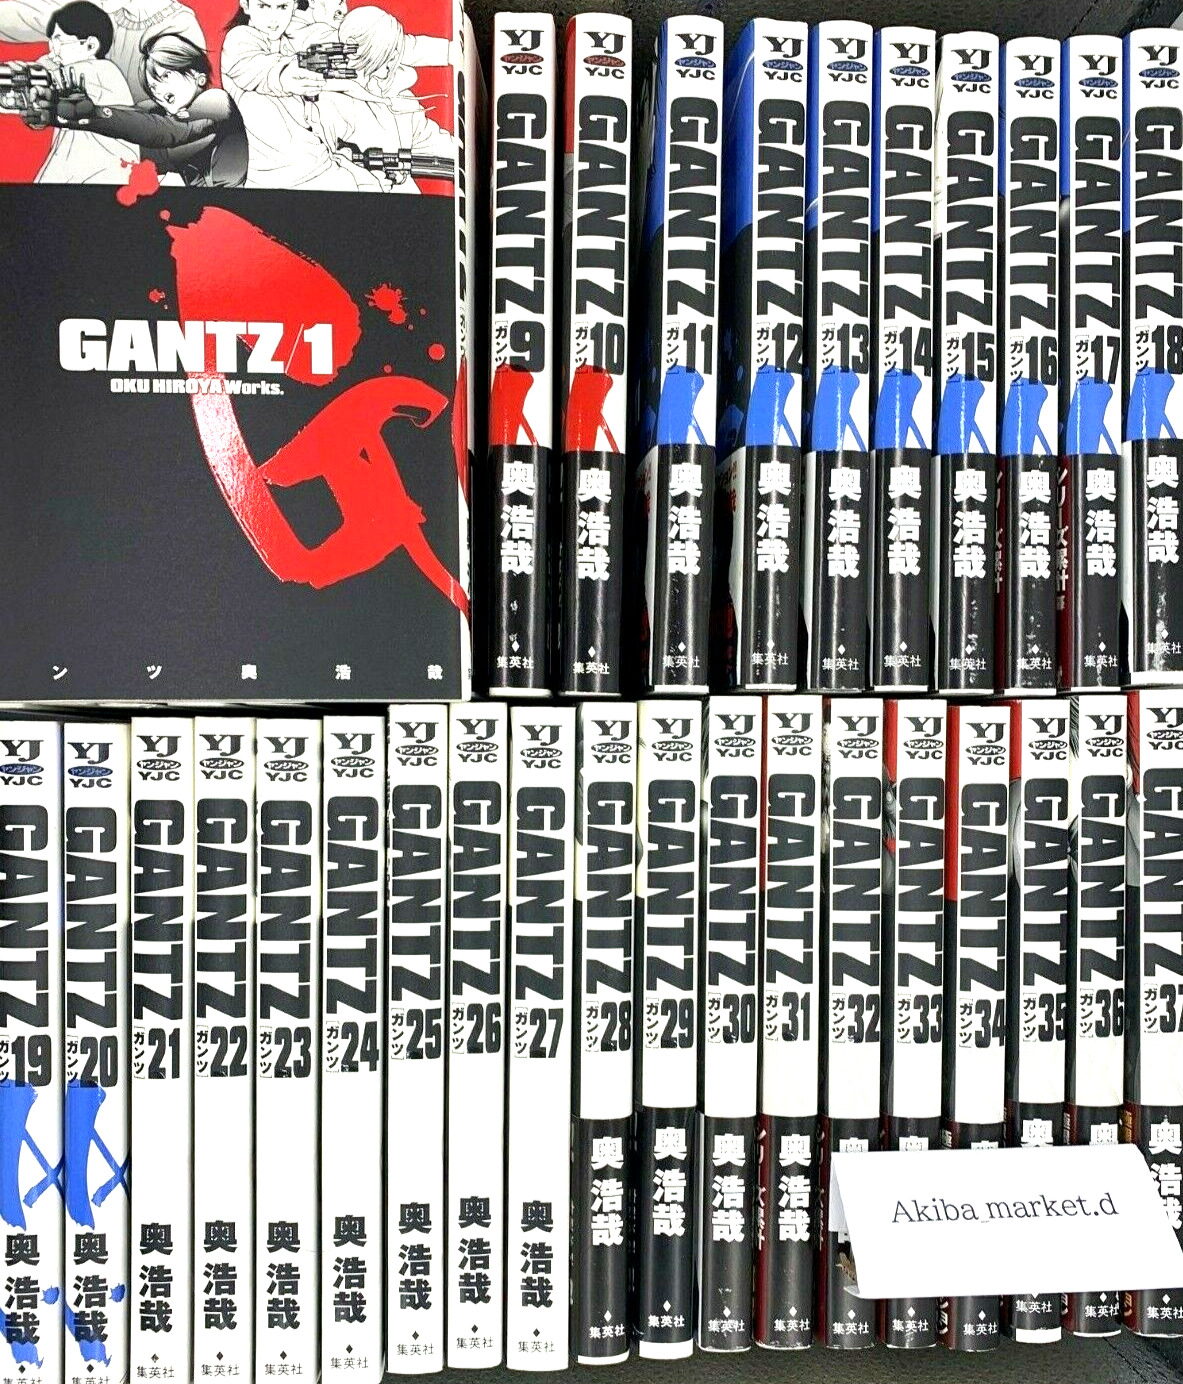 Gantz 【Japanese language】Vol.1-37 Complete Full set Manga Comics